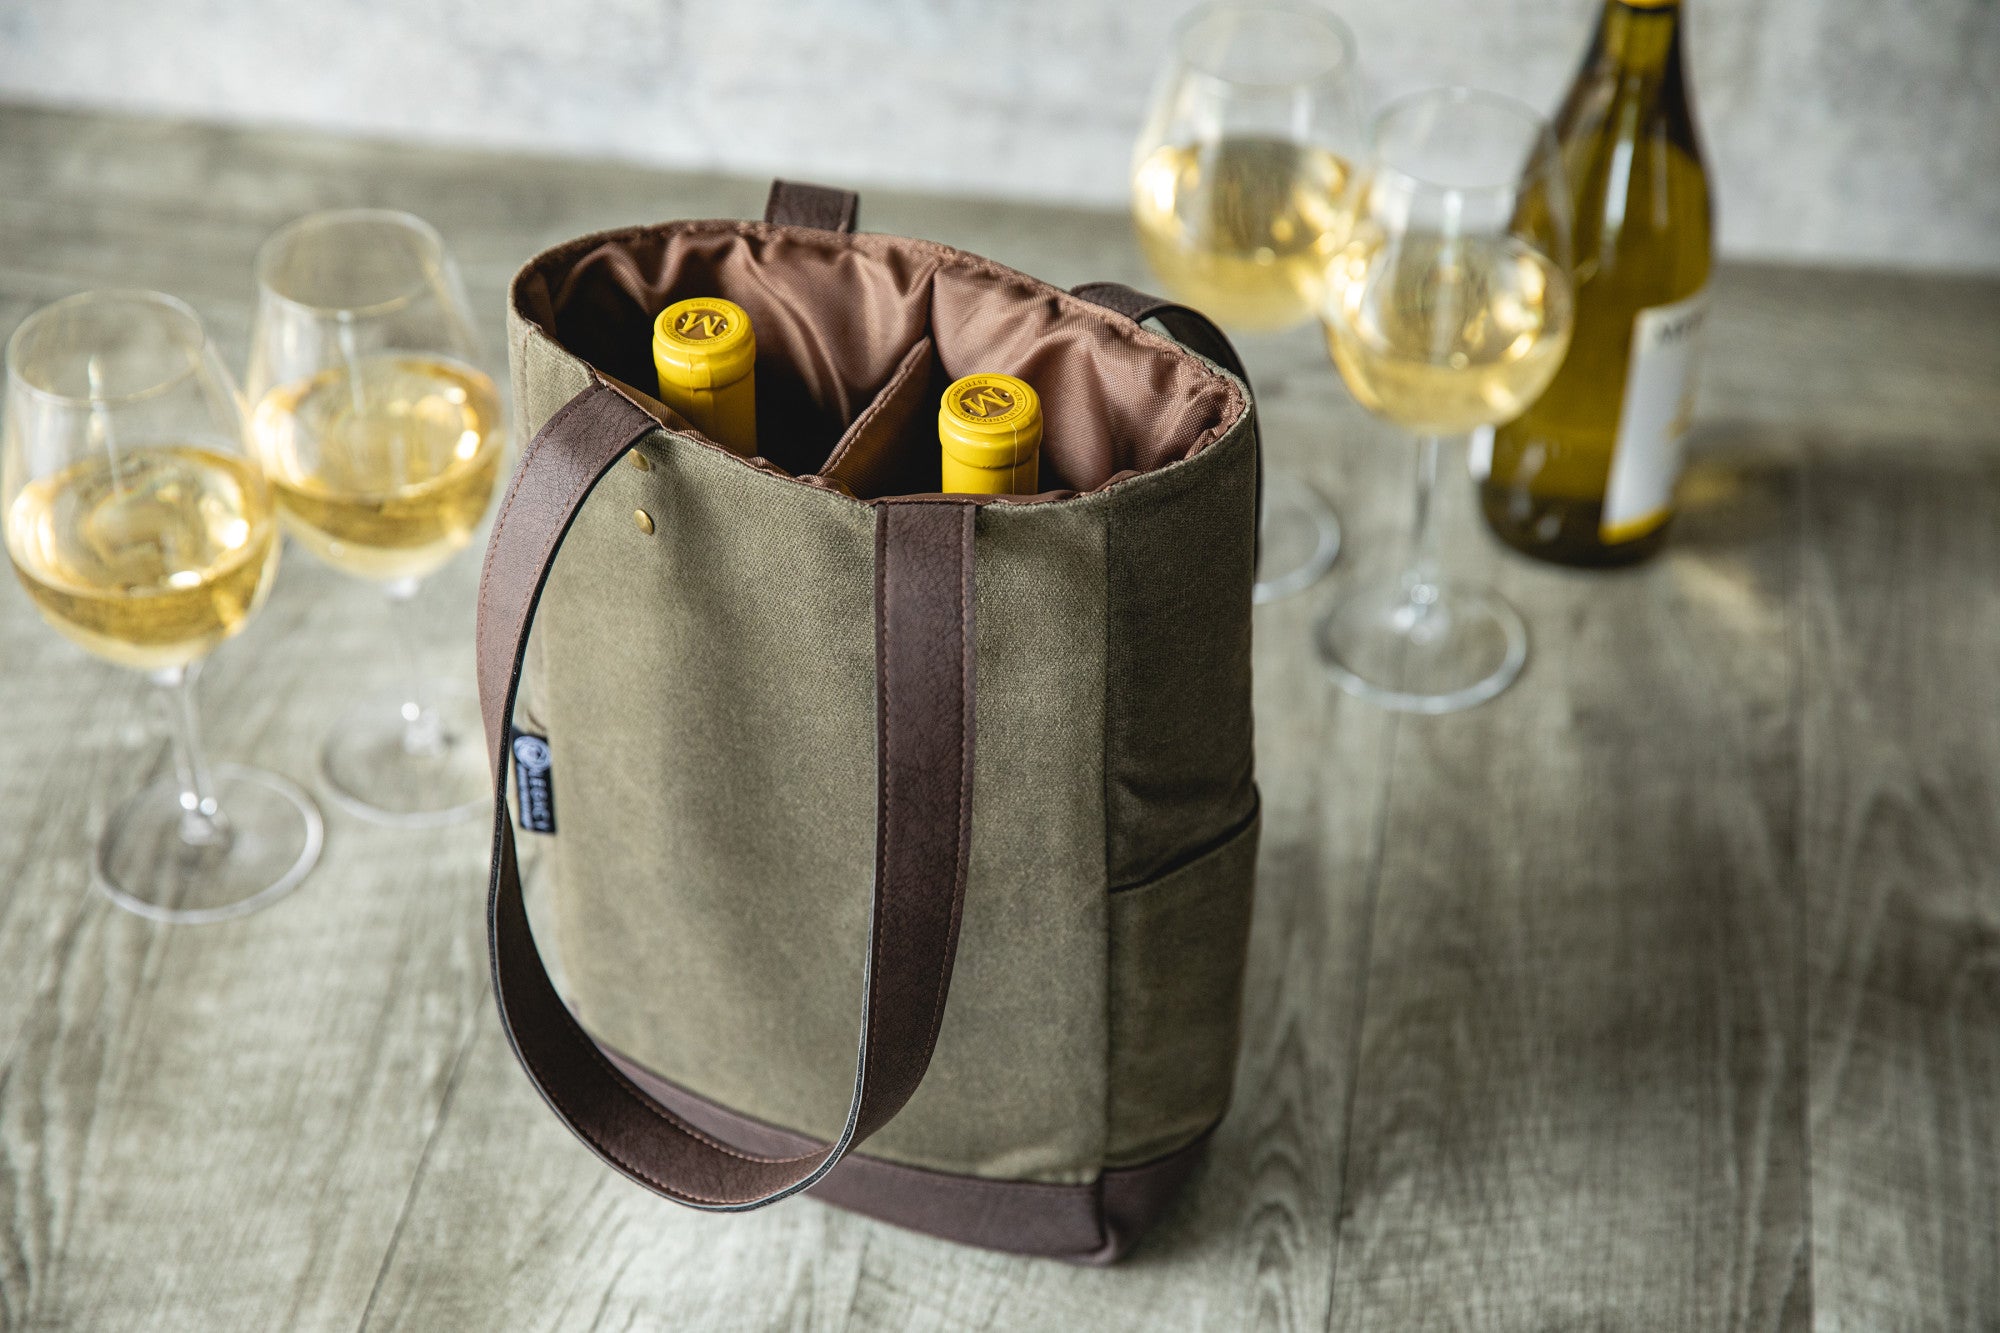 Oklahoma Sooners - 2 Bottle Insulated Wine Cooler Bag